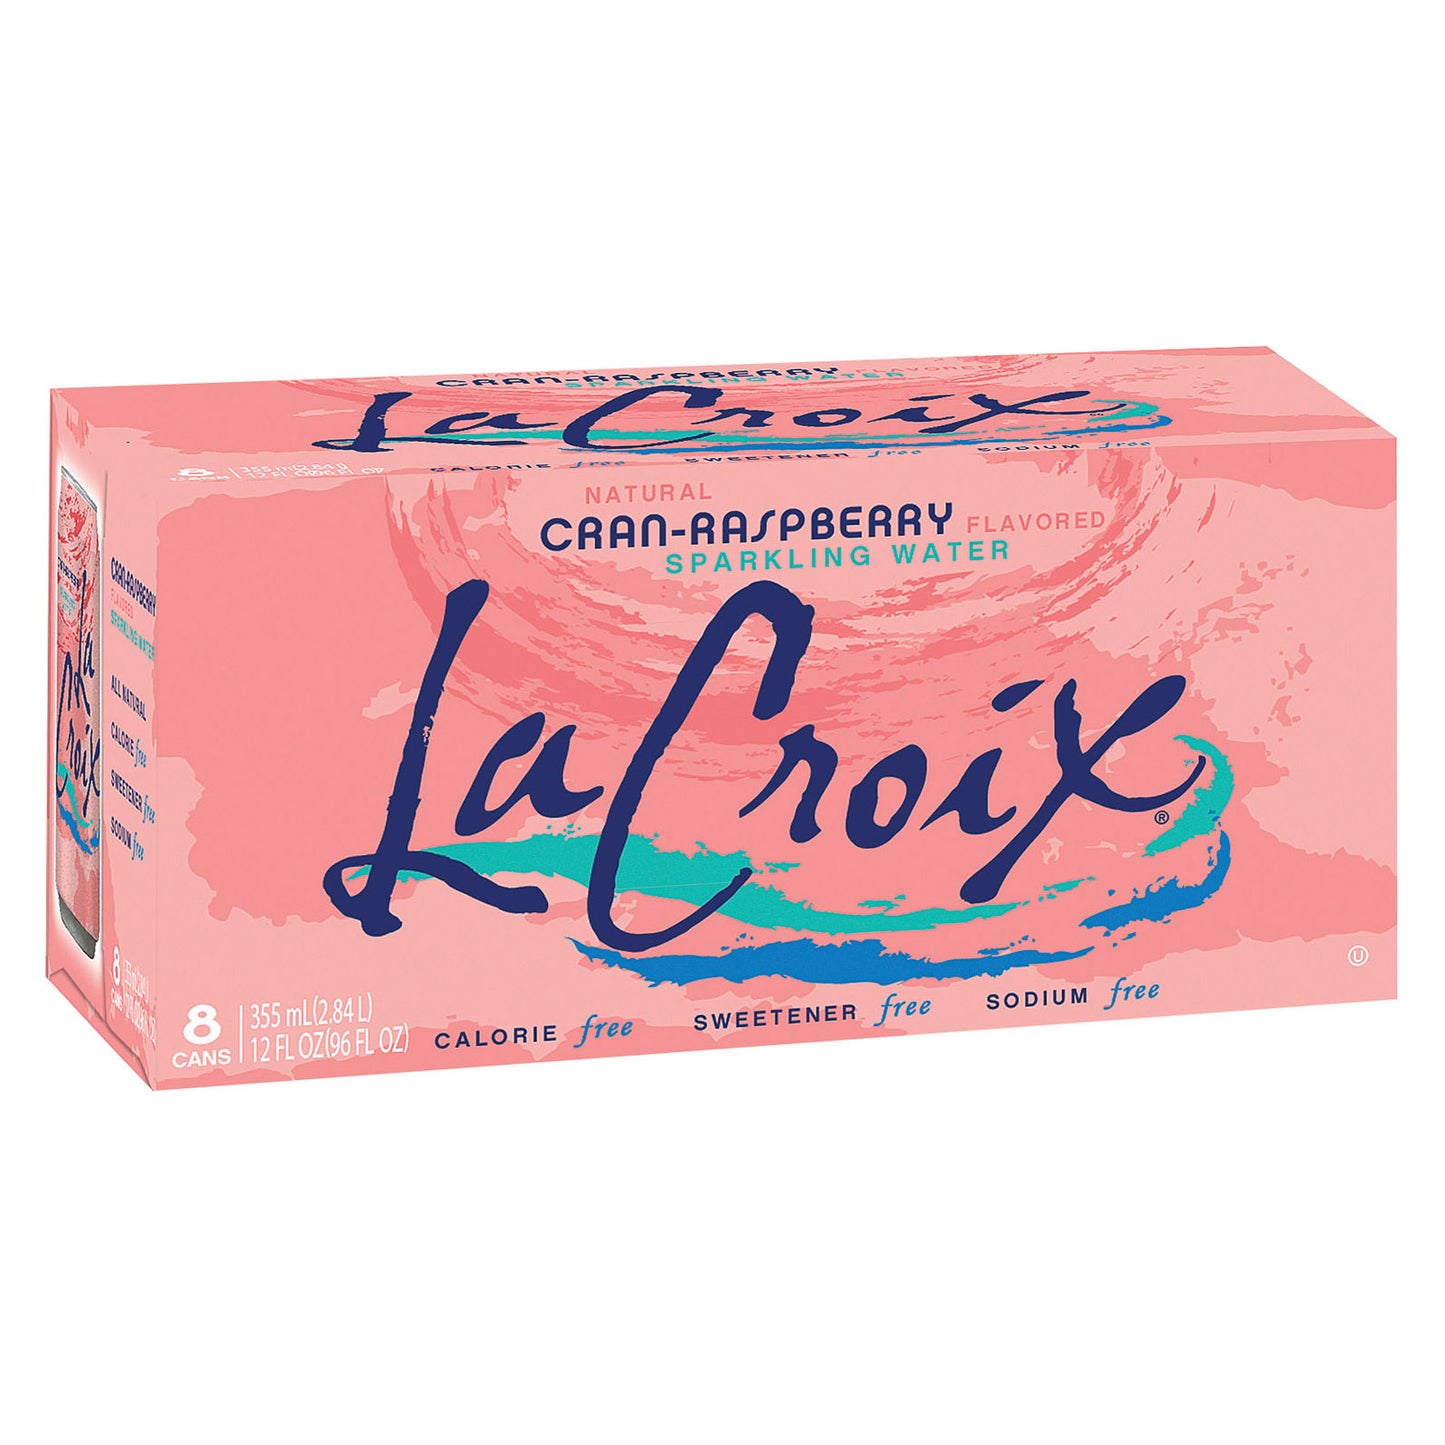 Lacroix Sparkling Water - Cran-raspberry - Case Of 3 - 12 Fl Oz.